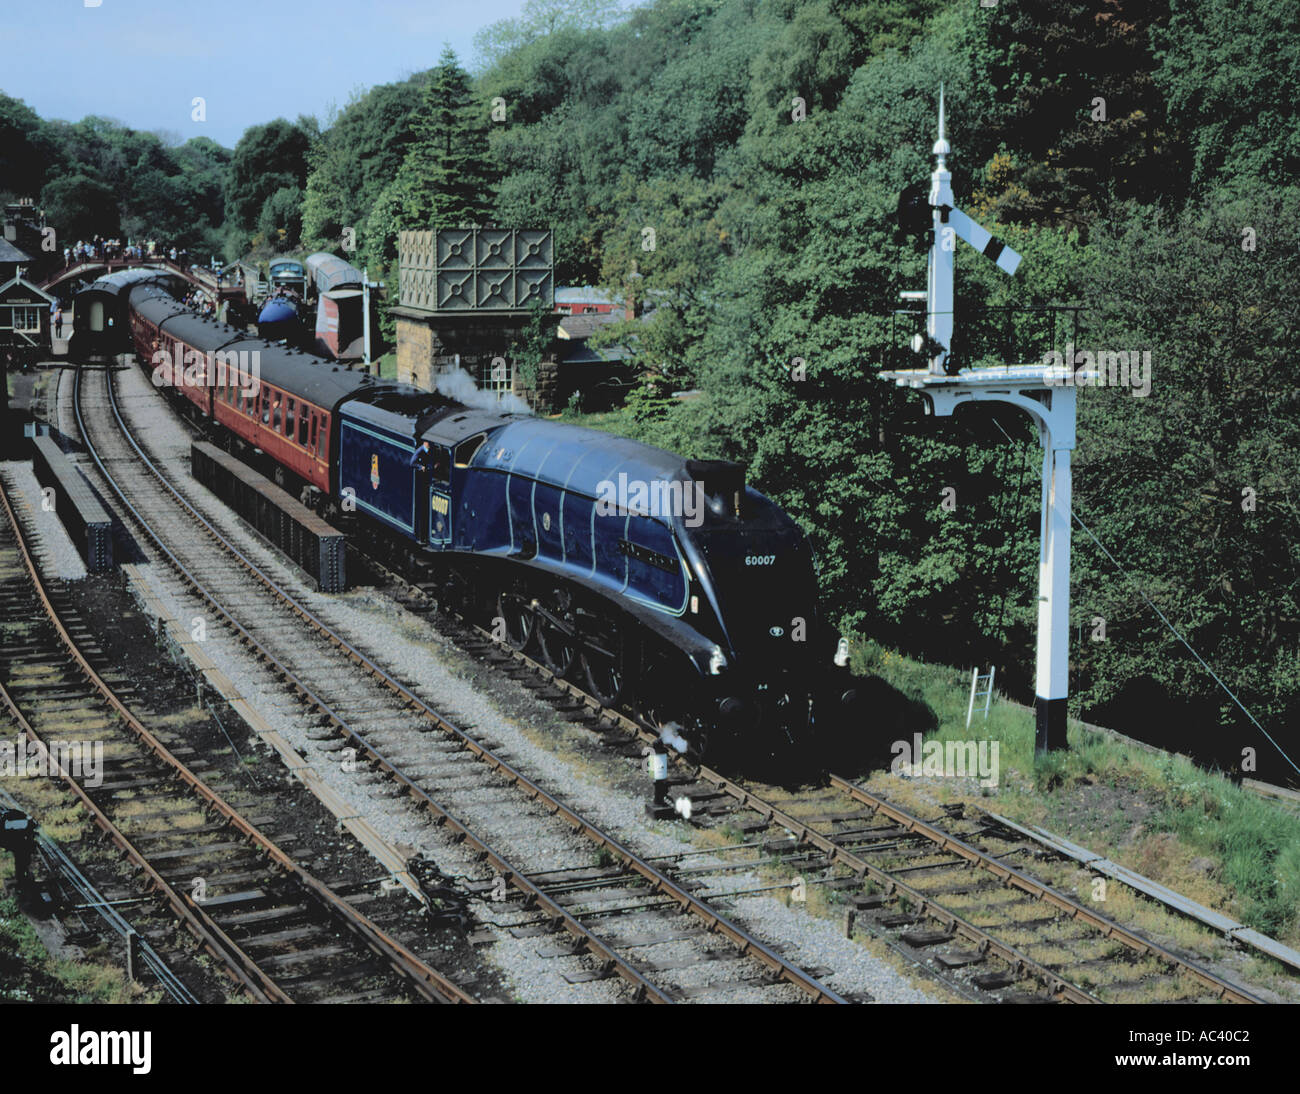 The 'Sir Nigel Gresley' steam locomotive at Goathland Station, North York Moors Railway, North Yorkshire, England, UK. Stock Photo